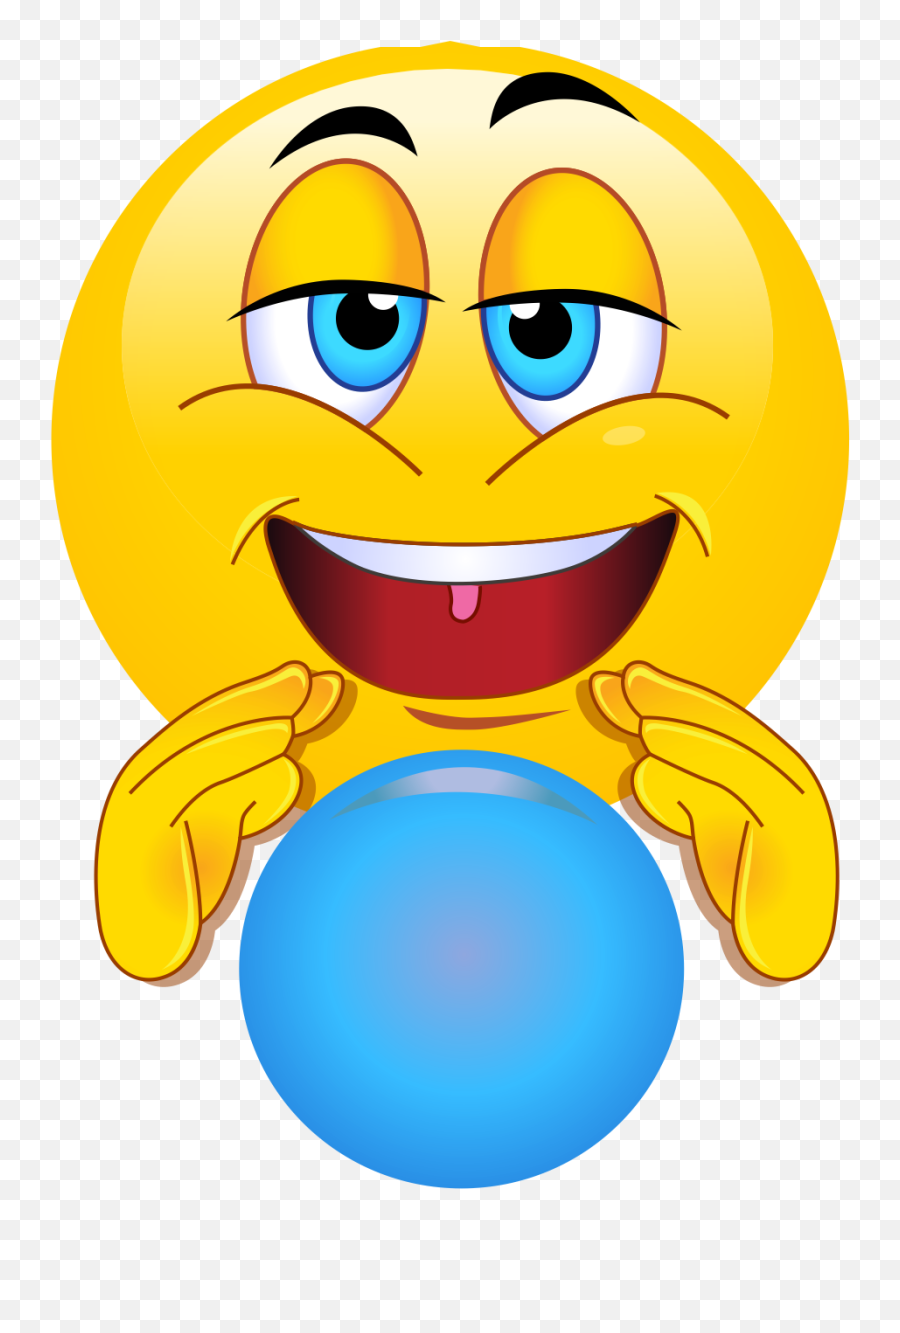 Crystal Ball Emoji Decal - Save The World Emoji,What Emoji To Use For Thank You